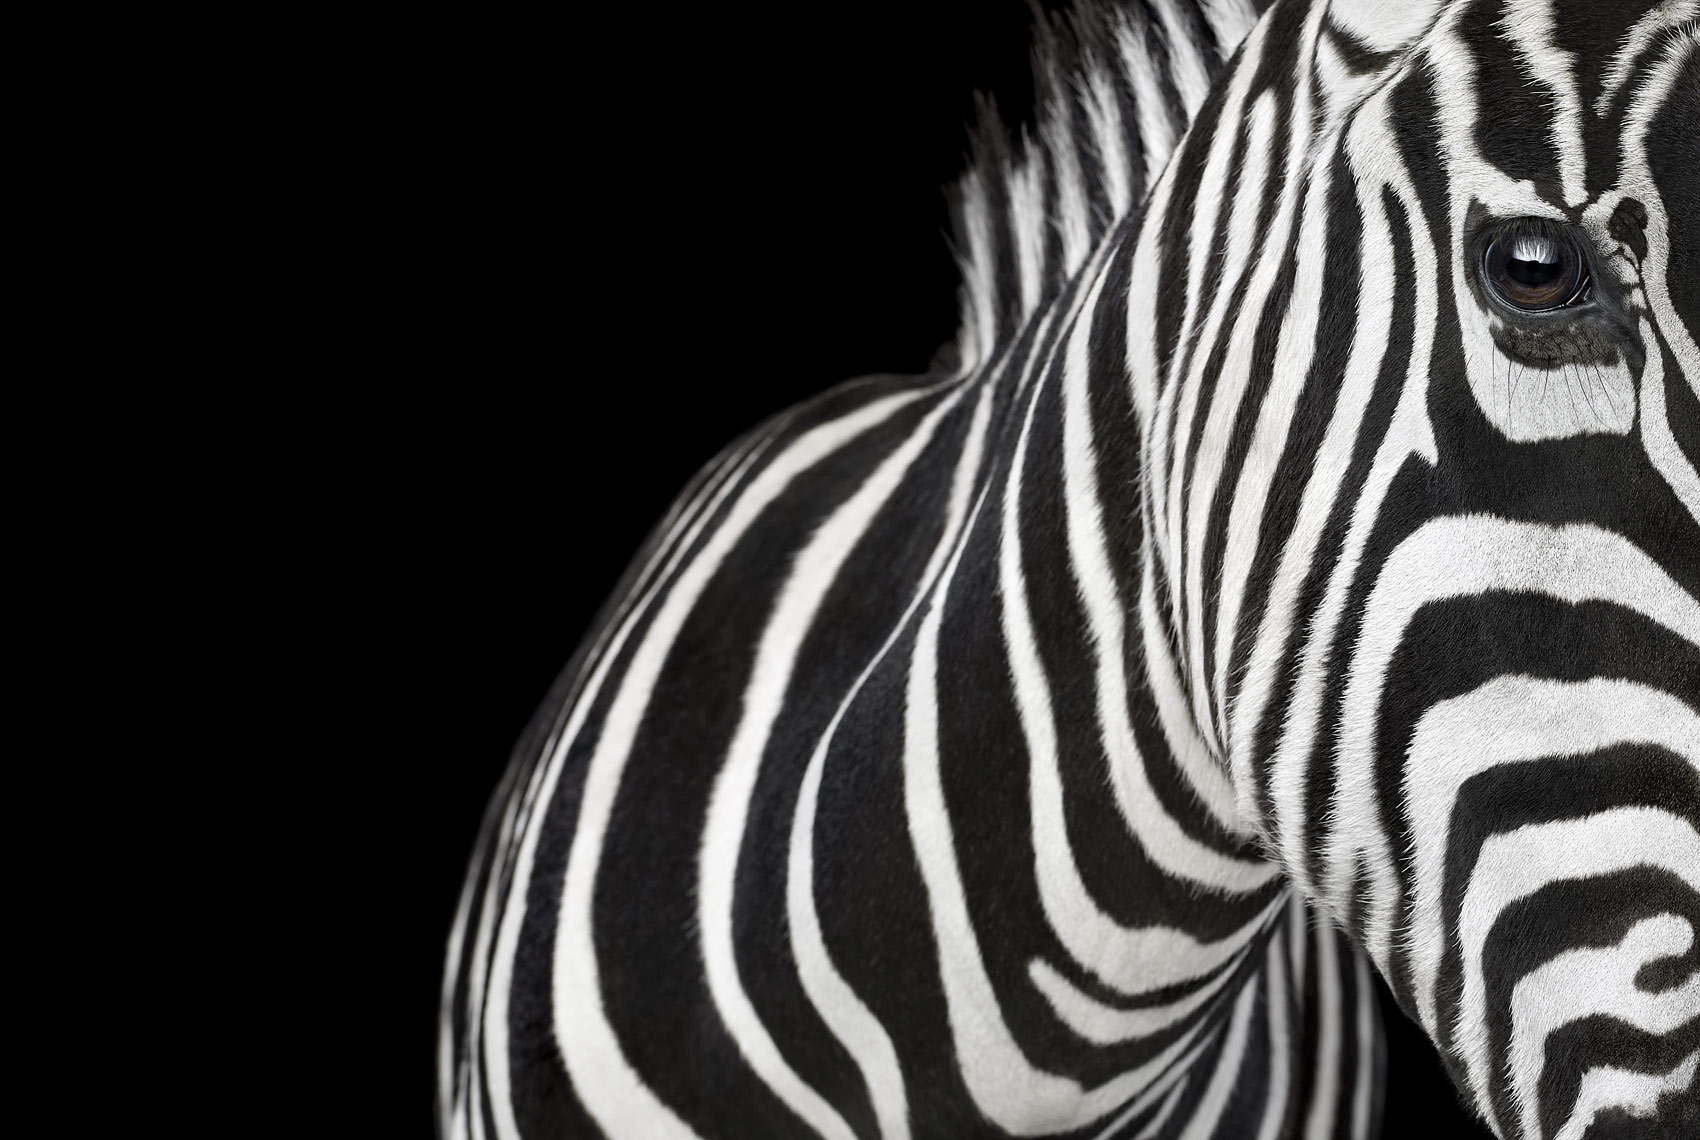 Zebra close up portrait by fine art wildlife photographer Brad Wilson